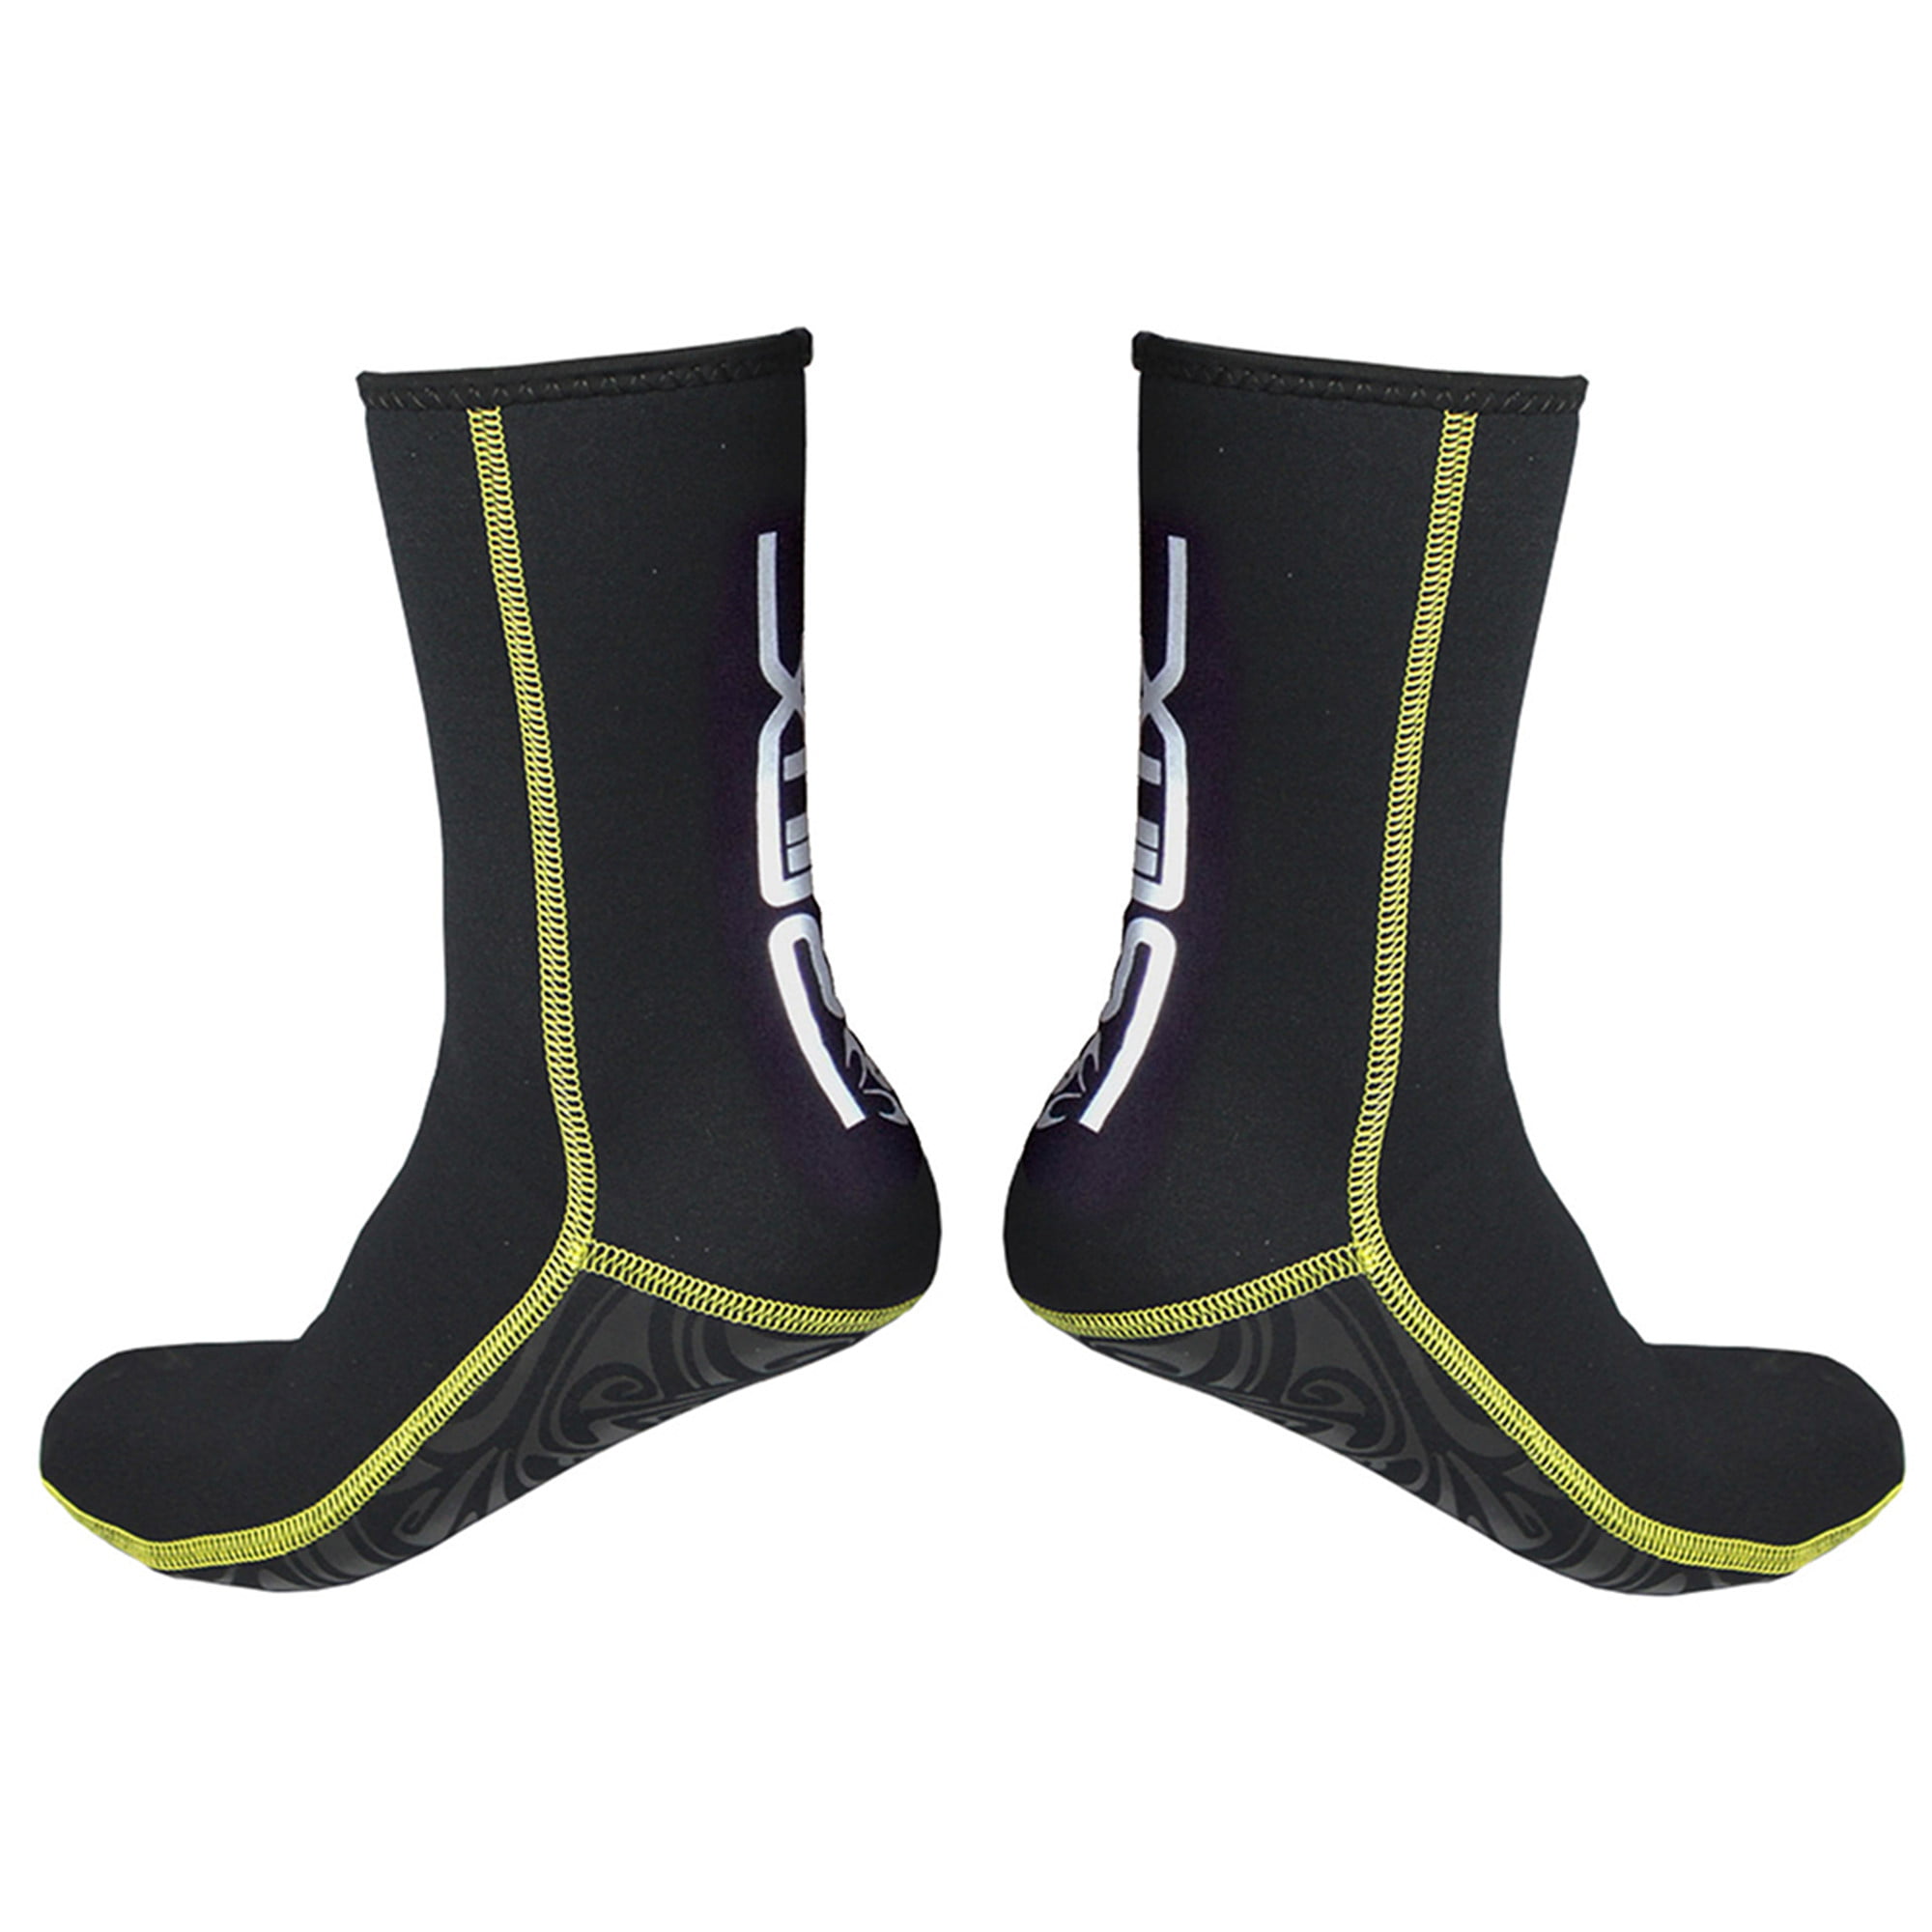 Unisex Adults 3MM Premium Soft Neoprene Swimming Socks Water Spots Elastic Cuff